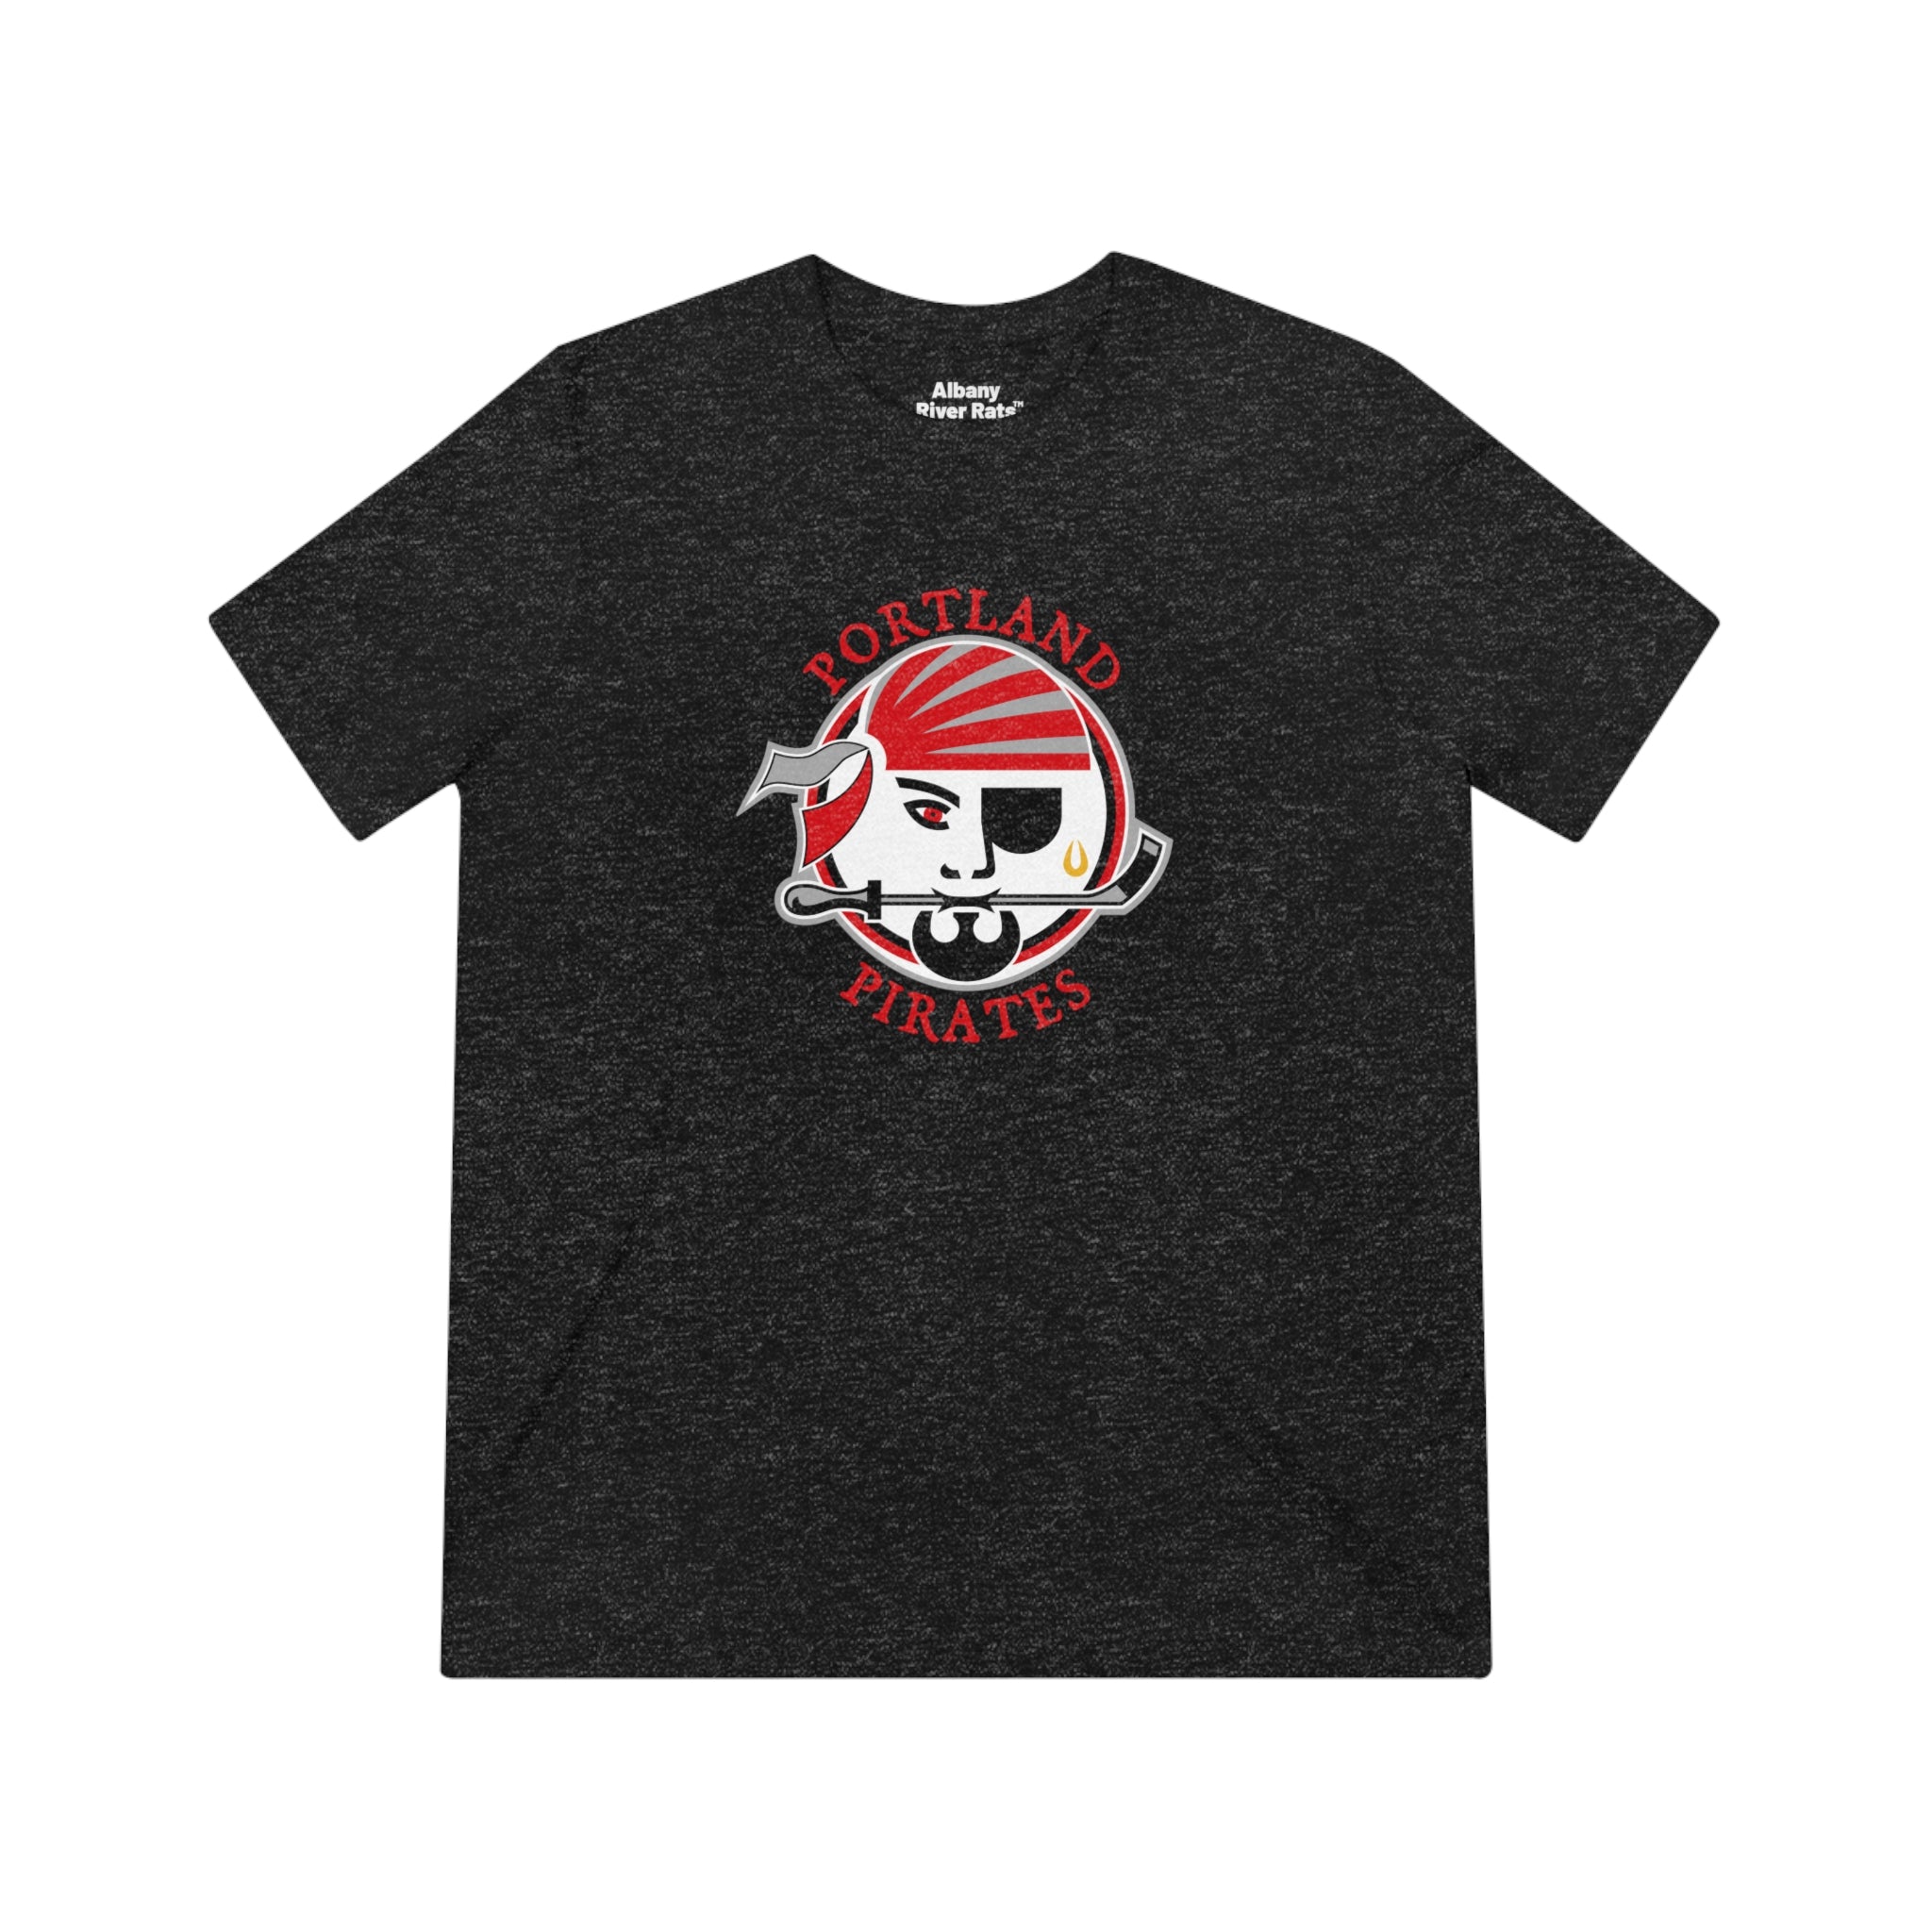 Portland Pirates™ 1990s T-Shirt (Tri-Blend Super Light)